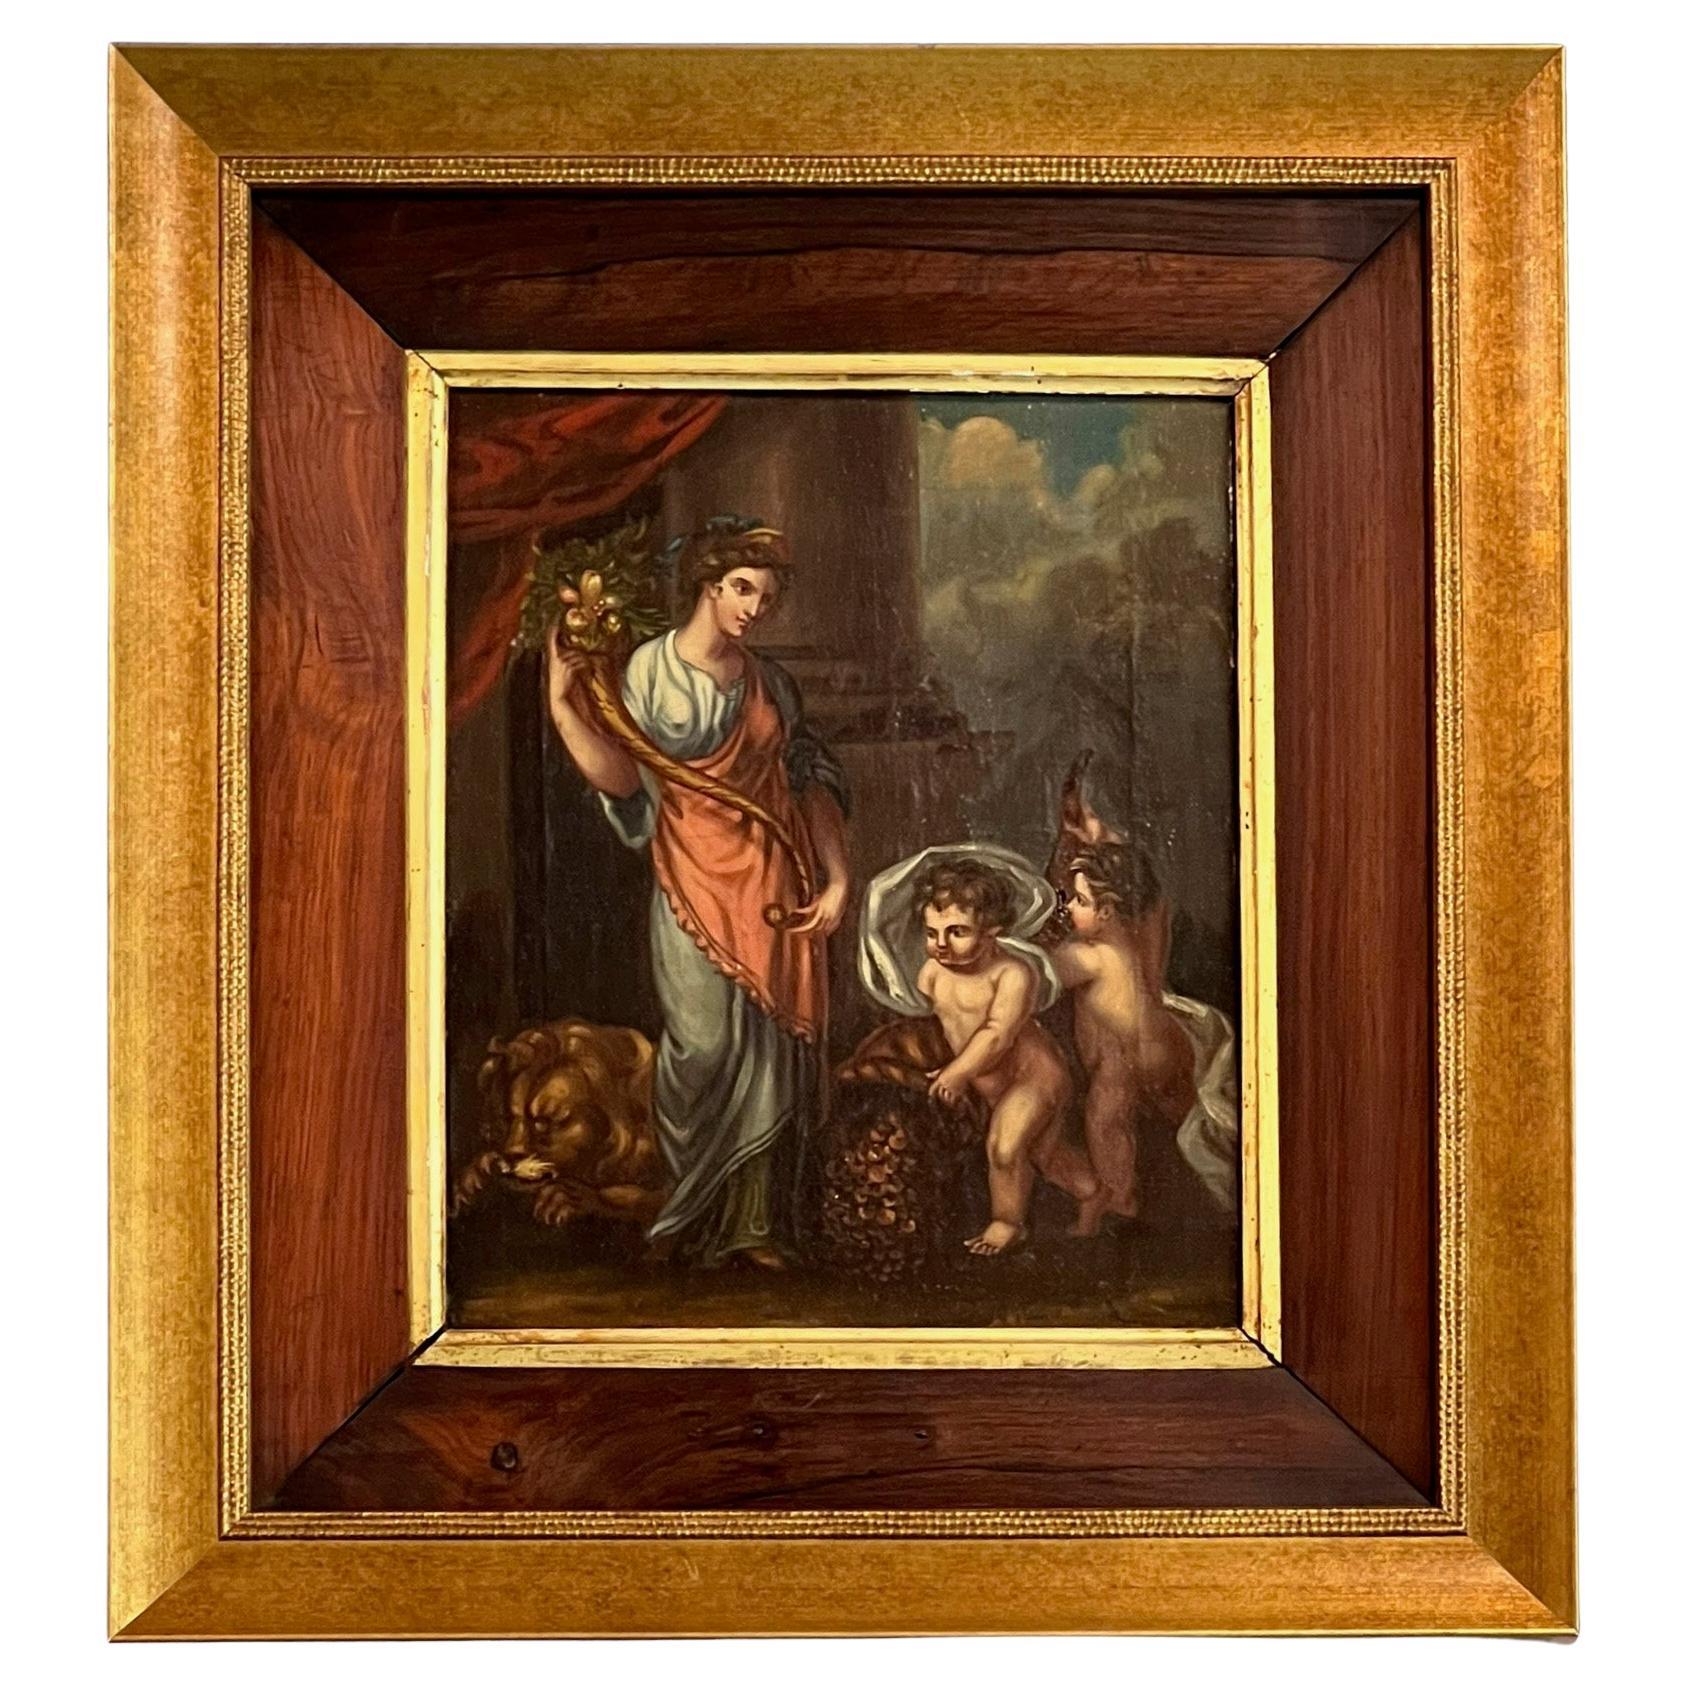 “Abundantia”, Oil on Panel, Attributed to Angelica 'Maria Anna' Kauffman